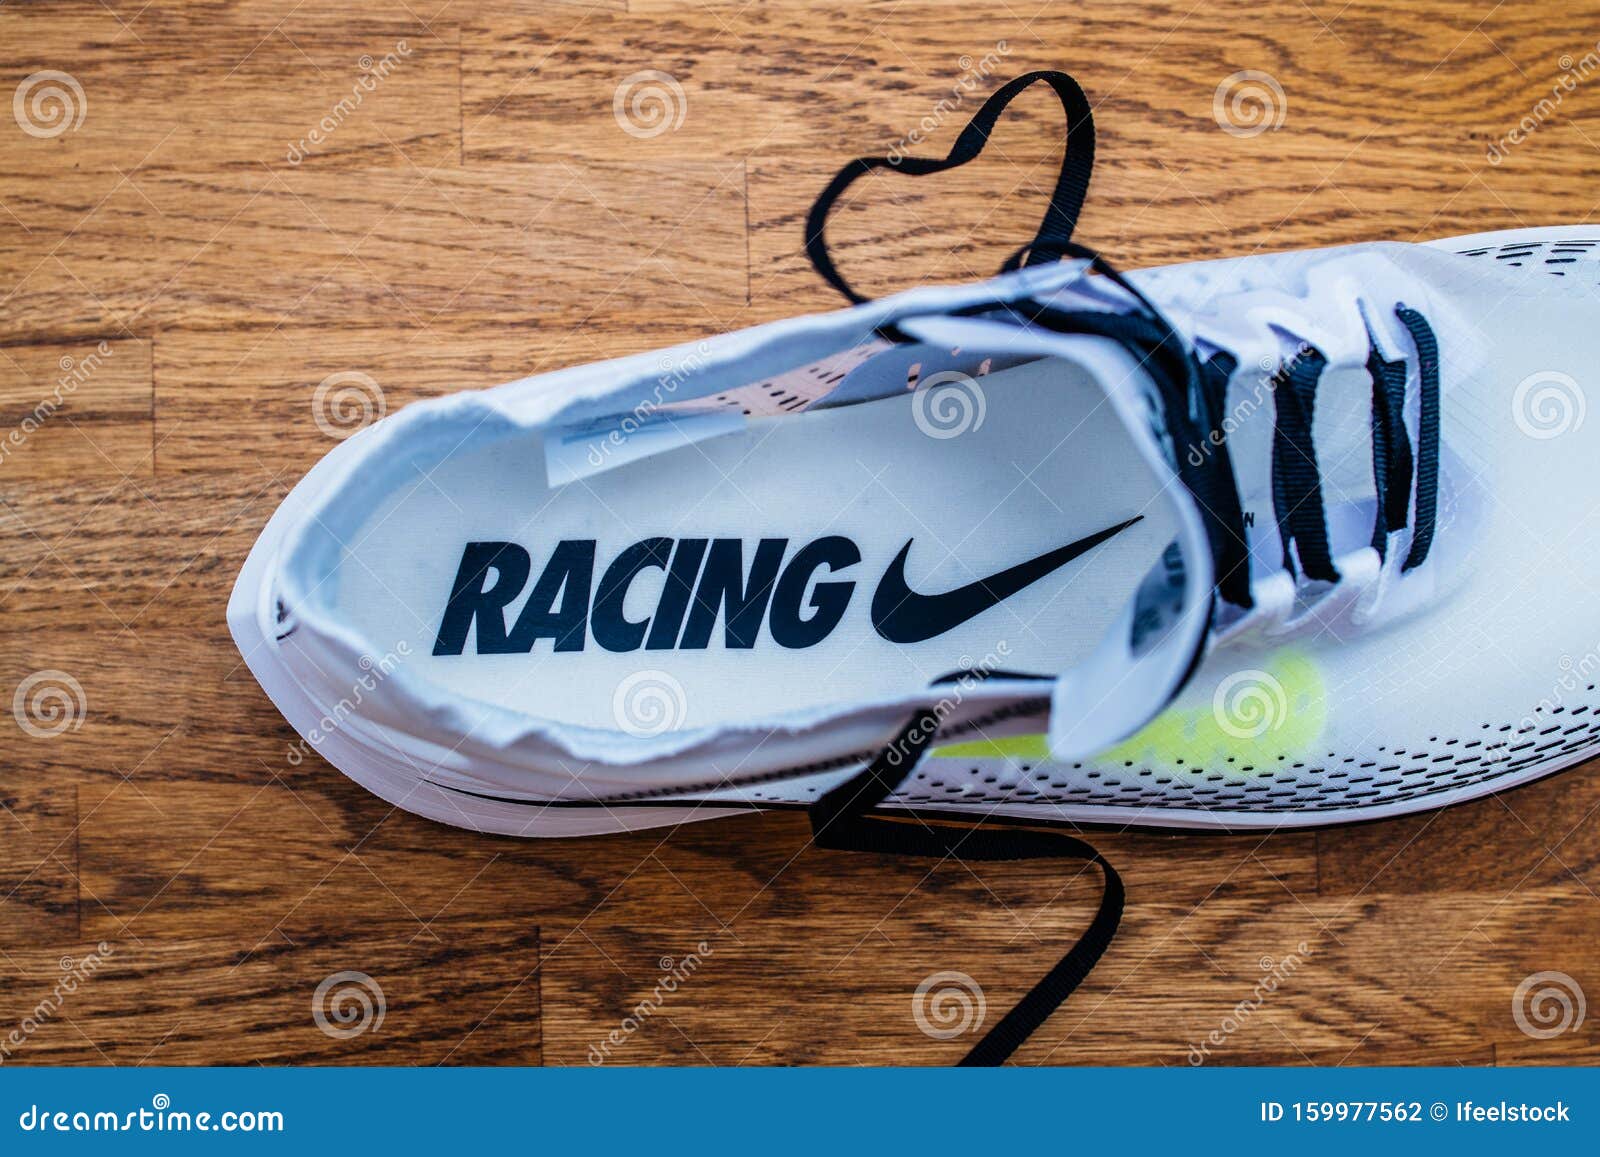 nike racing shoes